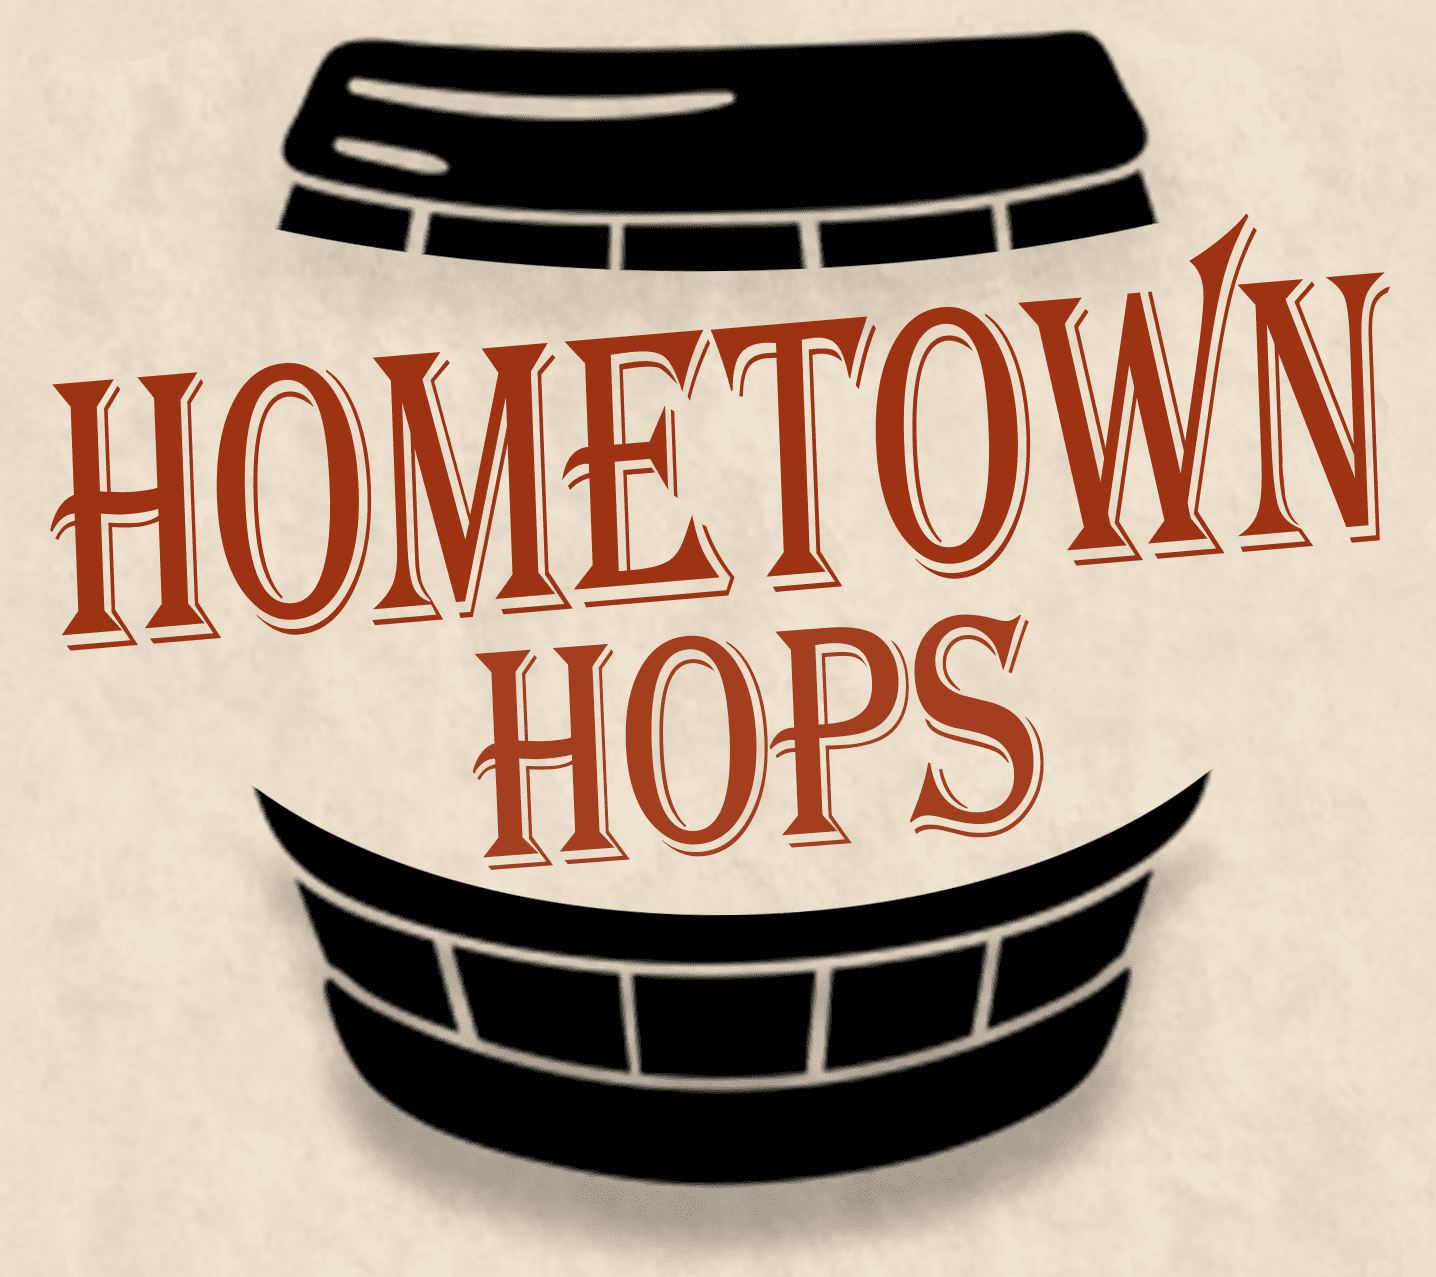 Hometown Hops event logo